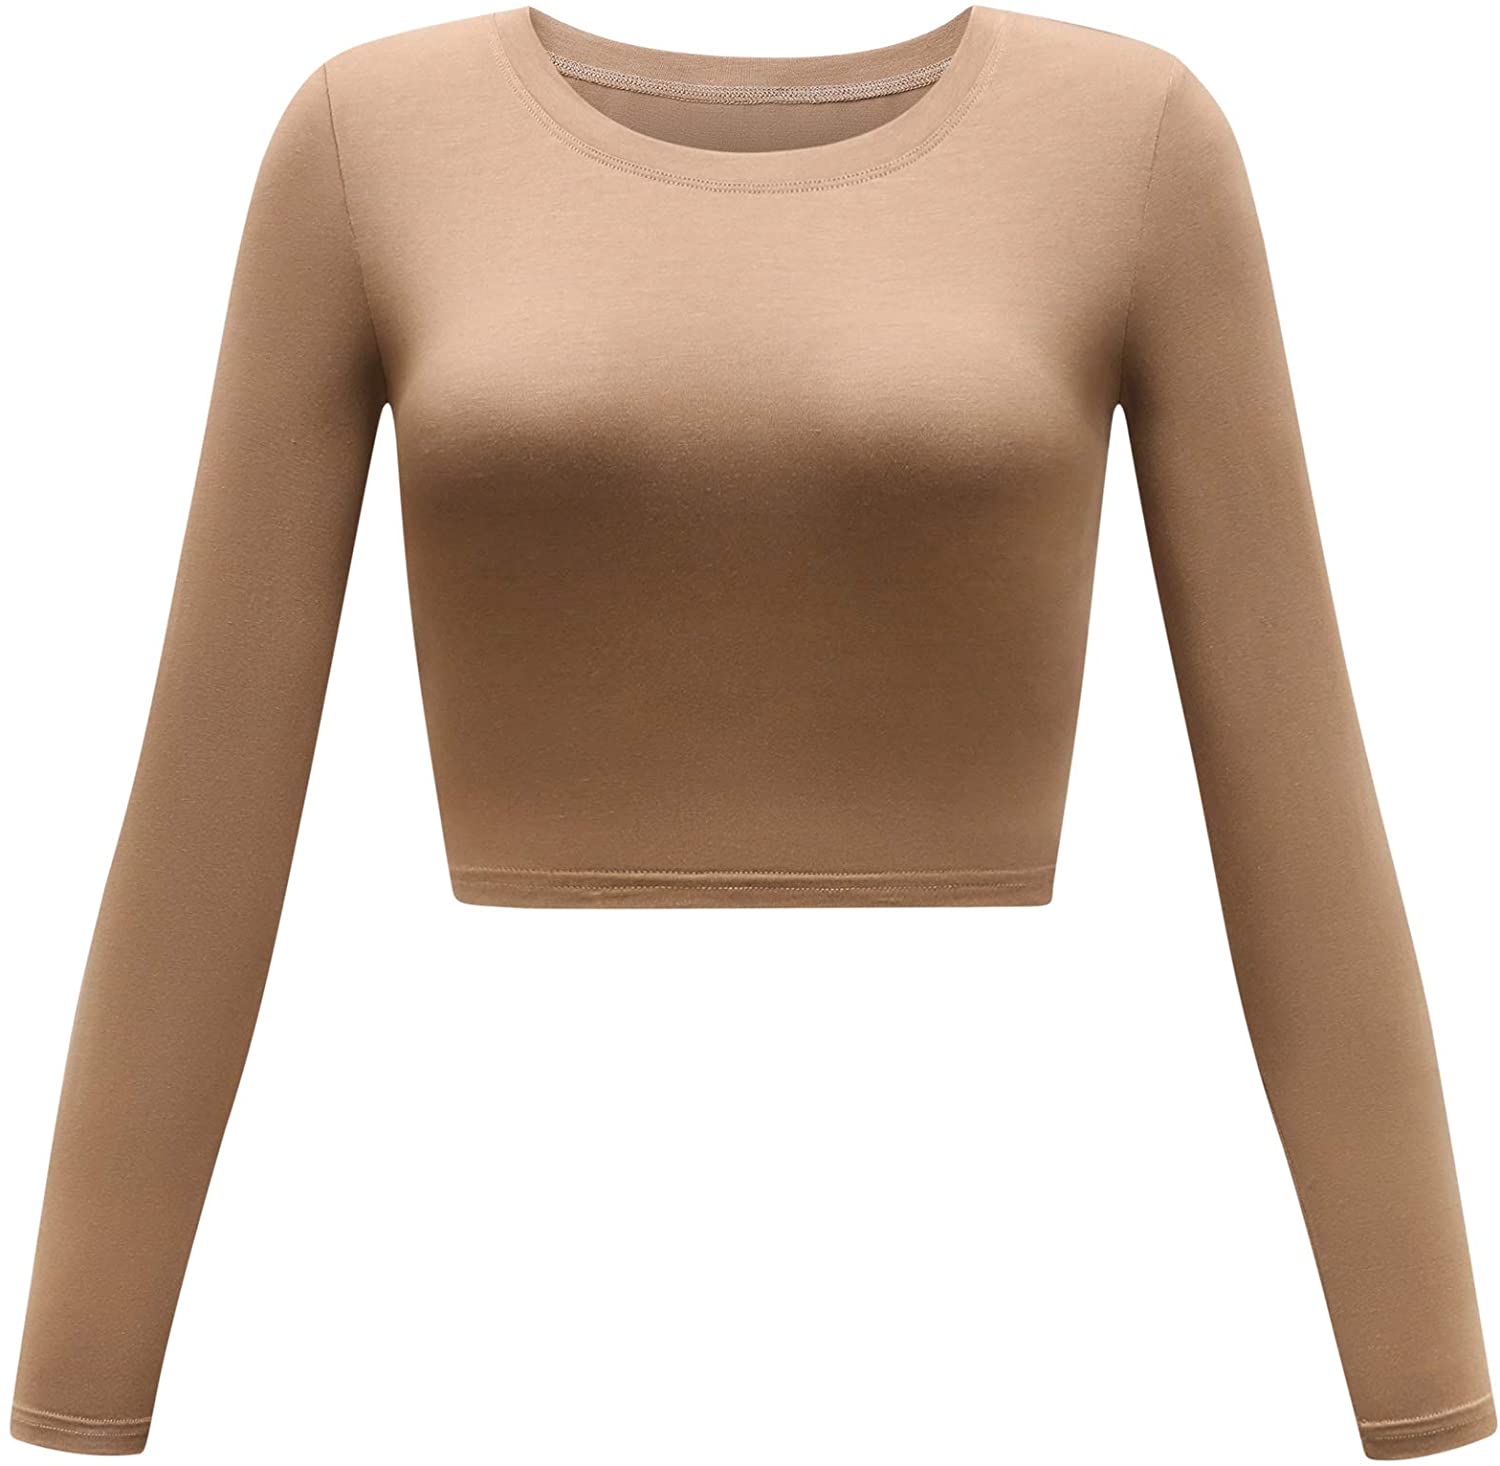 Artivaly Women's Basic Round Neck Short Sleeve Crop Top 